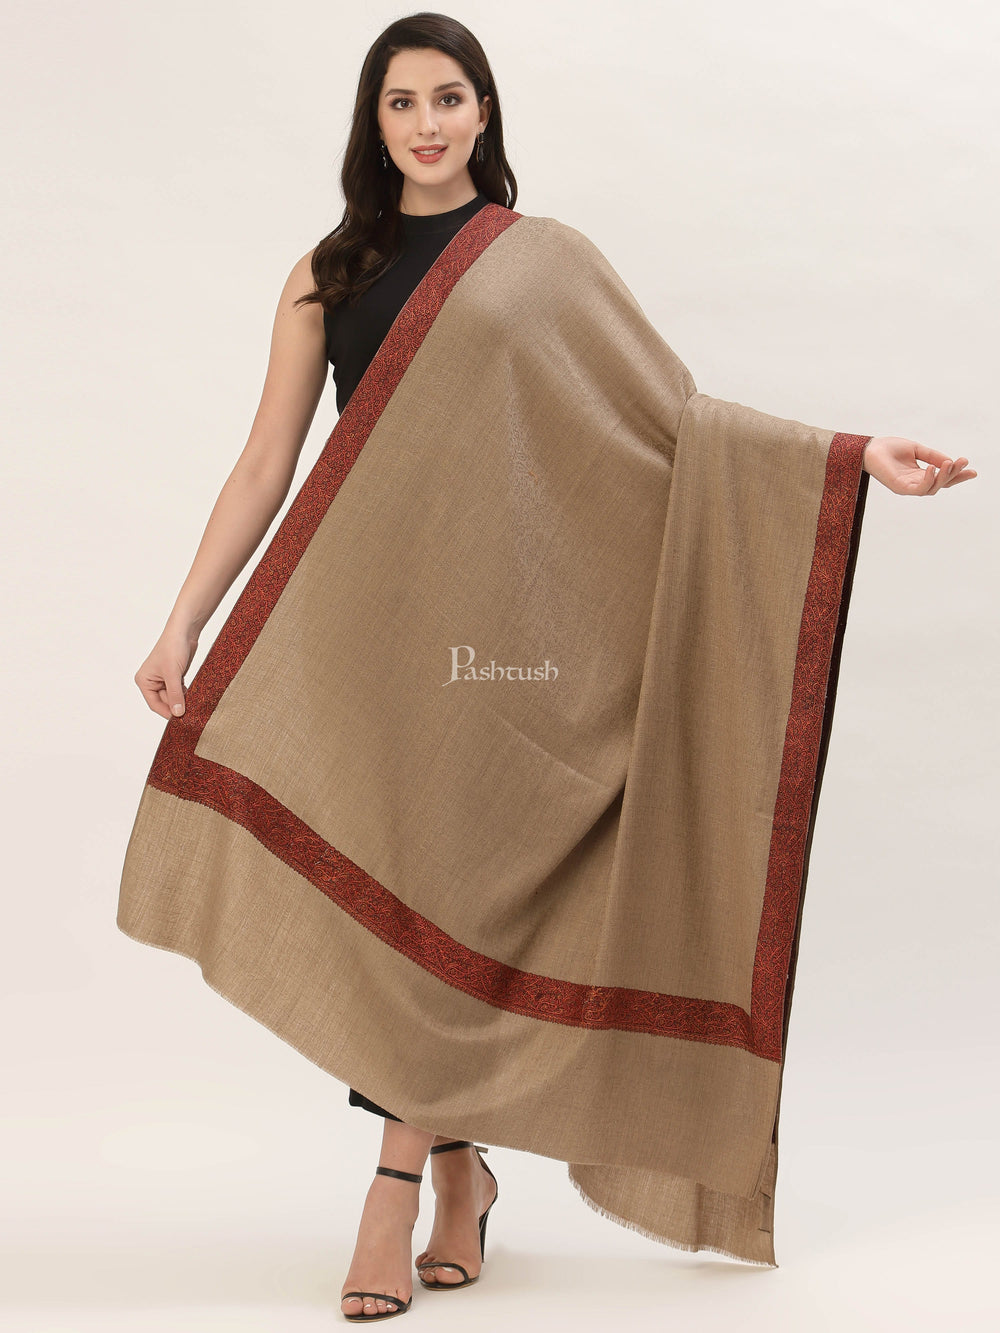 Pashtush India Mens Shawls Gents Shawl Pashtush Womens taupe Embroidery Daur Shawl